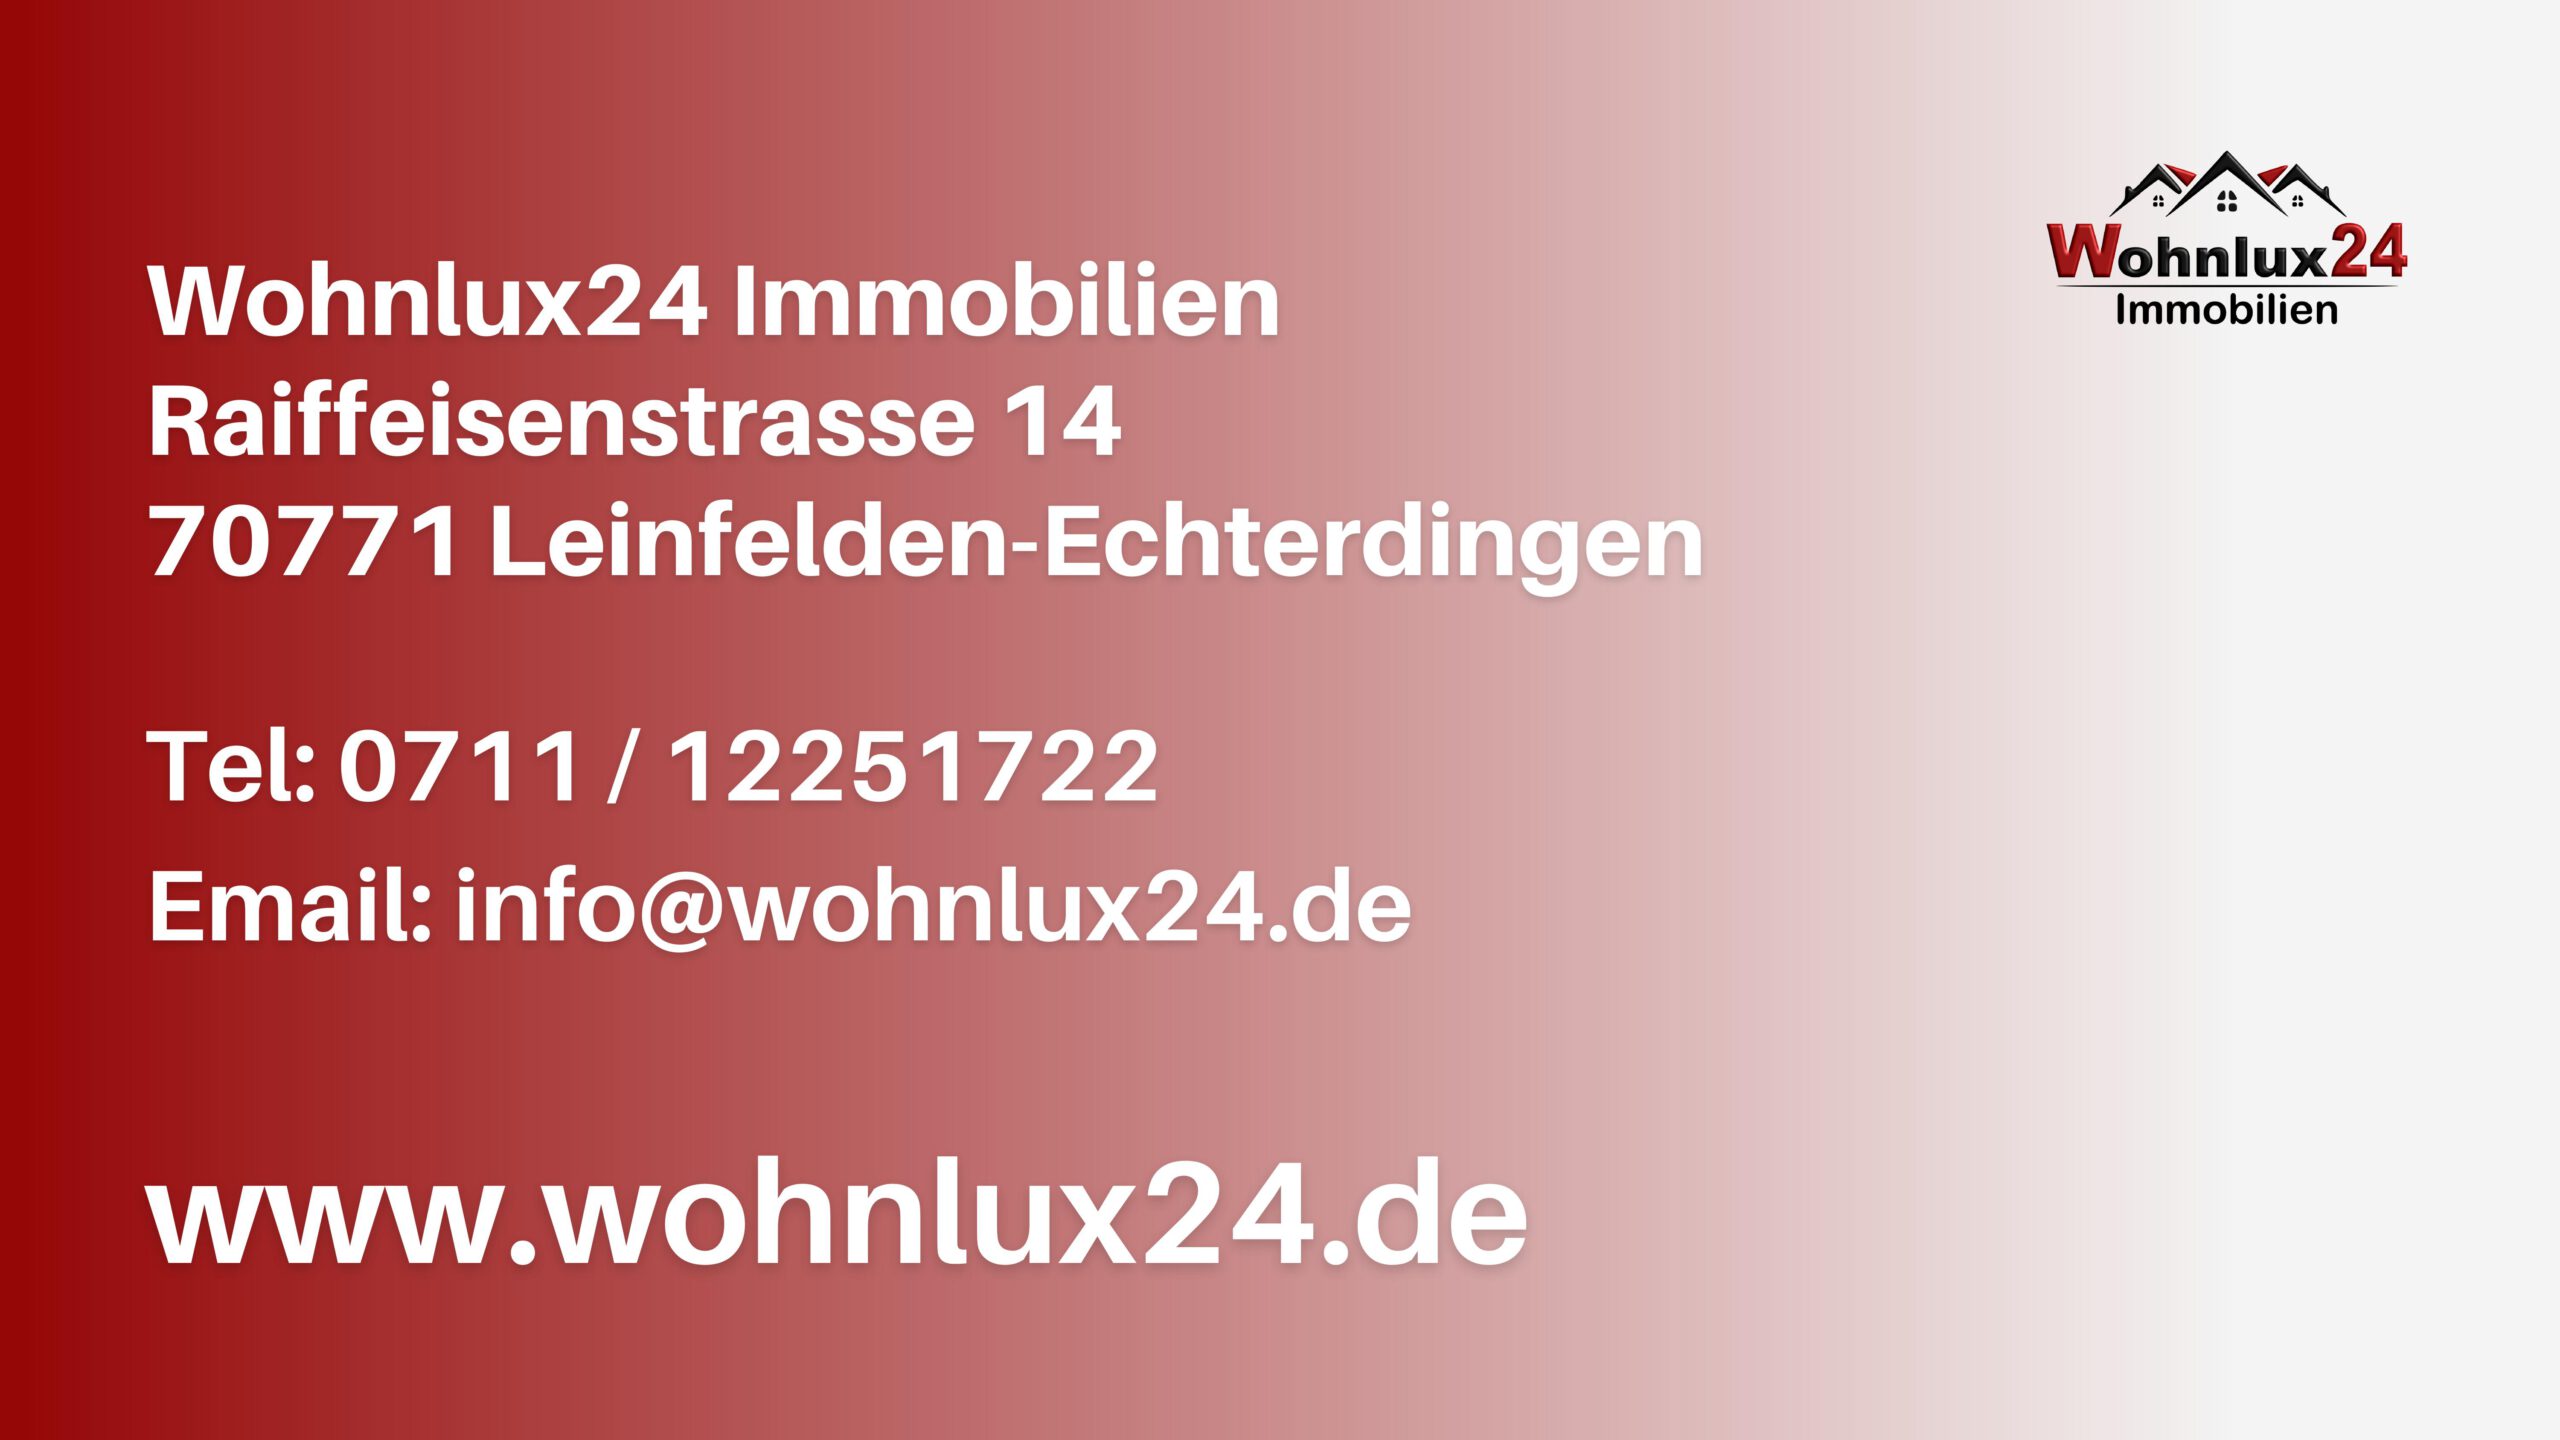 Wohnlux24 Immobilien | Immobilienmakler Stuttgart